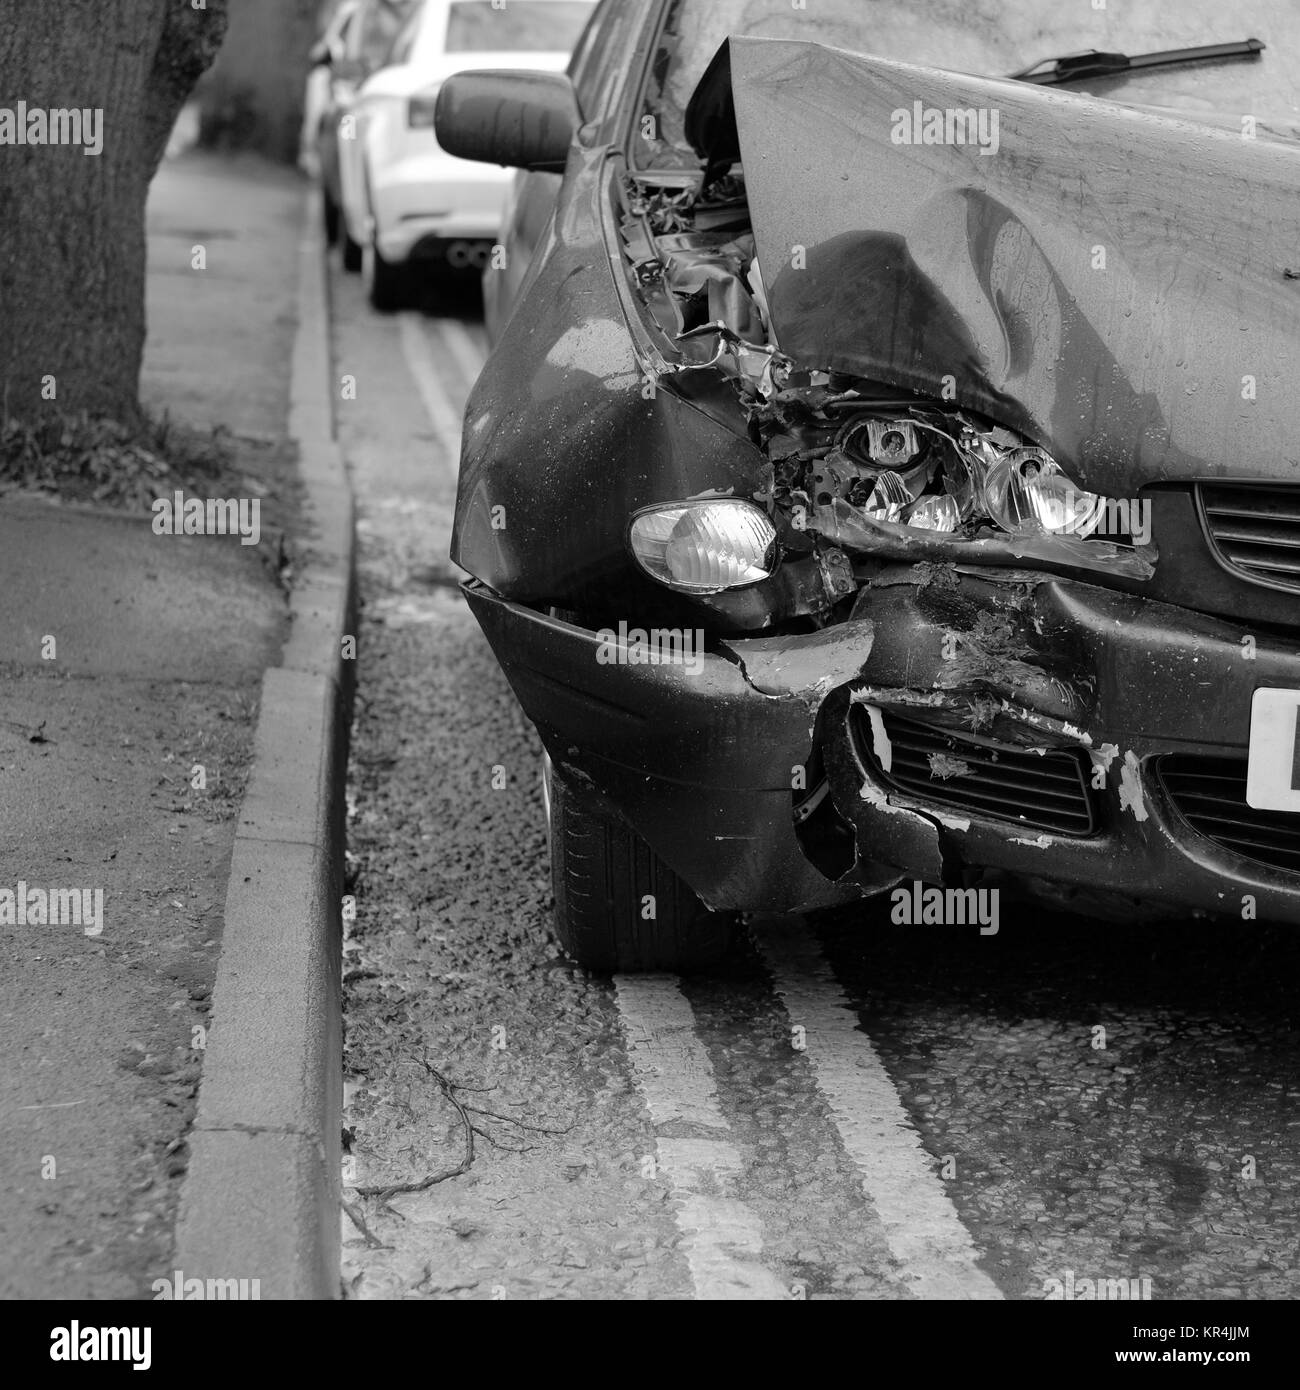 December 2017 - Tree 1 - Car 0, Old green car damaged where it ran into a tree Stock Photo